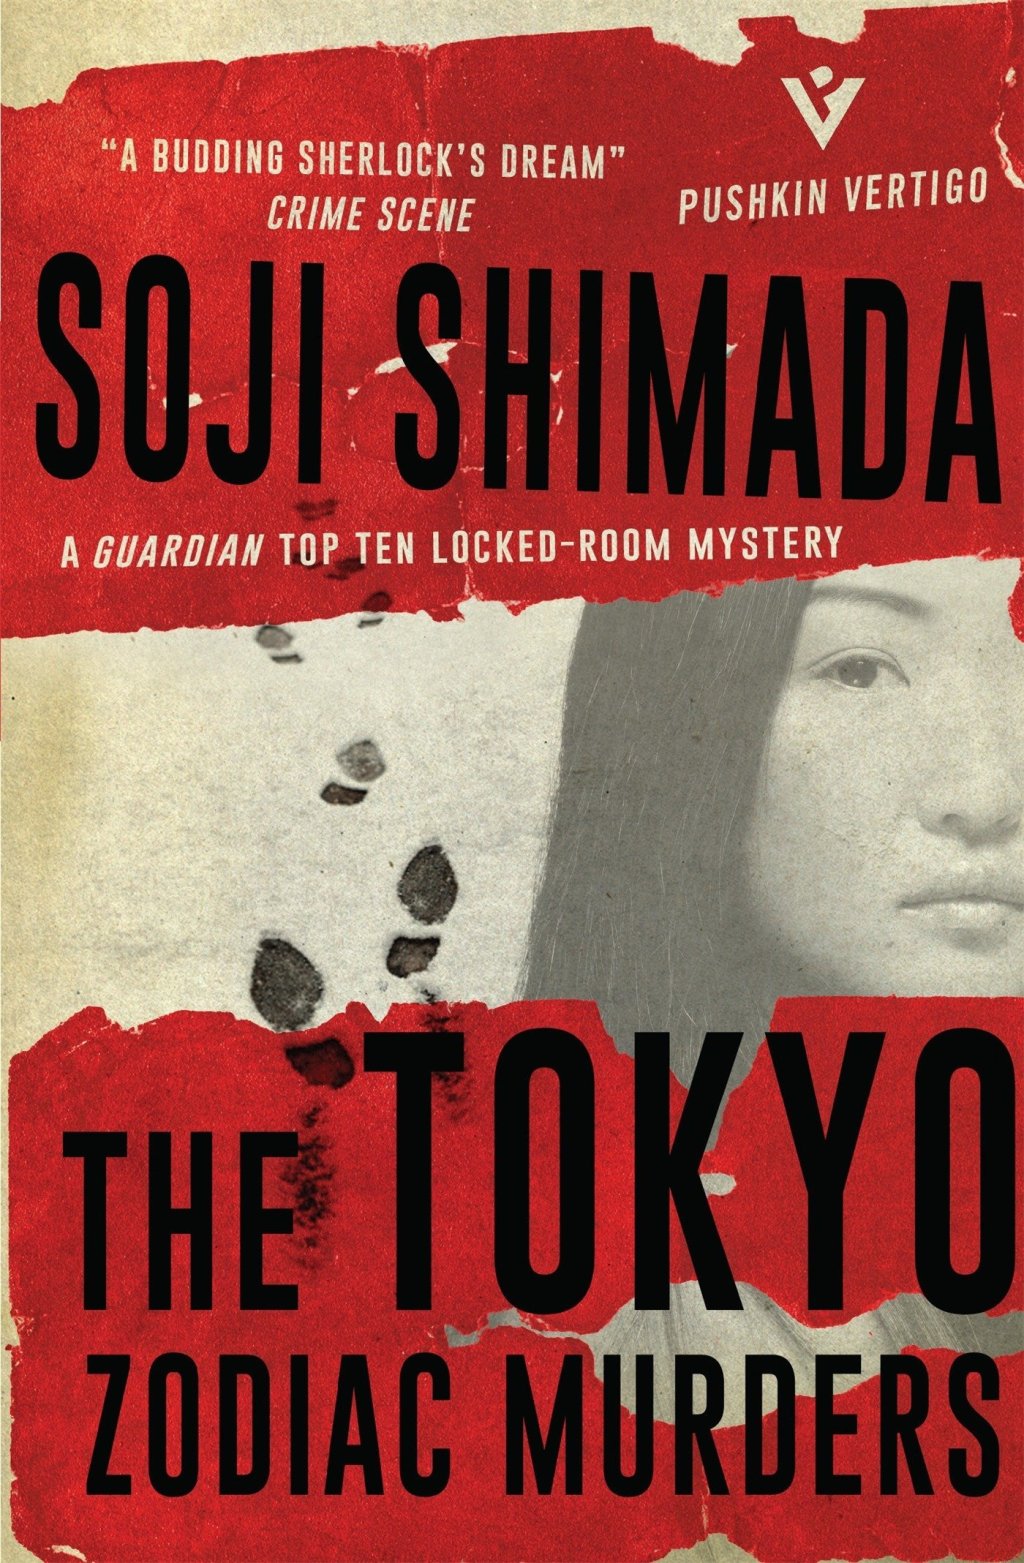 The Tokyo Zodiac Murders by Soji Shimada, translated by Ross and Shika Mackenzie